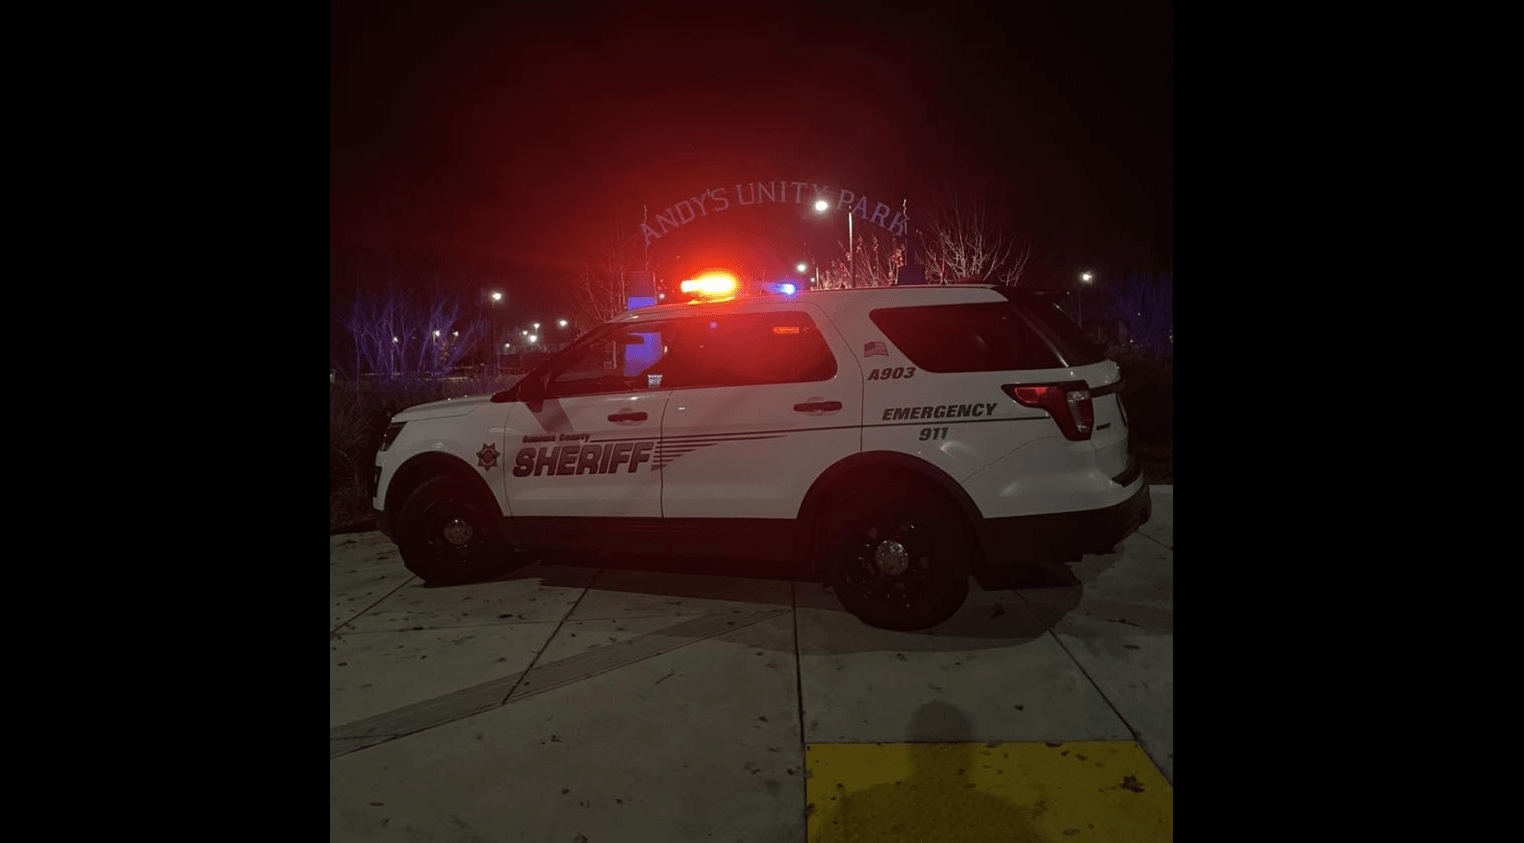 sonoma-sheriffs-deputies-responding-to-shooting-at-andys-unity-park